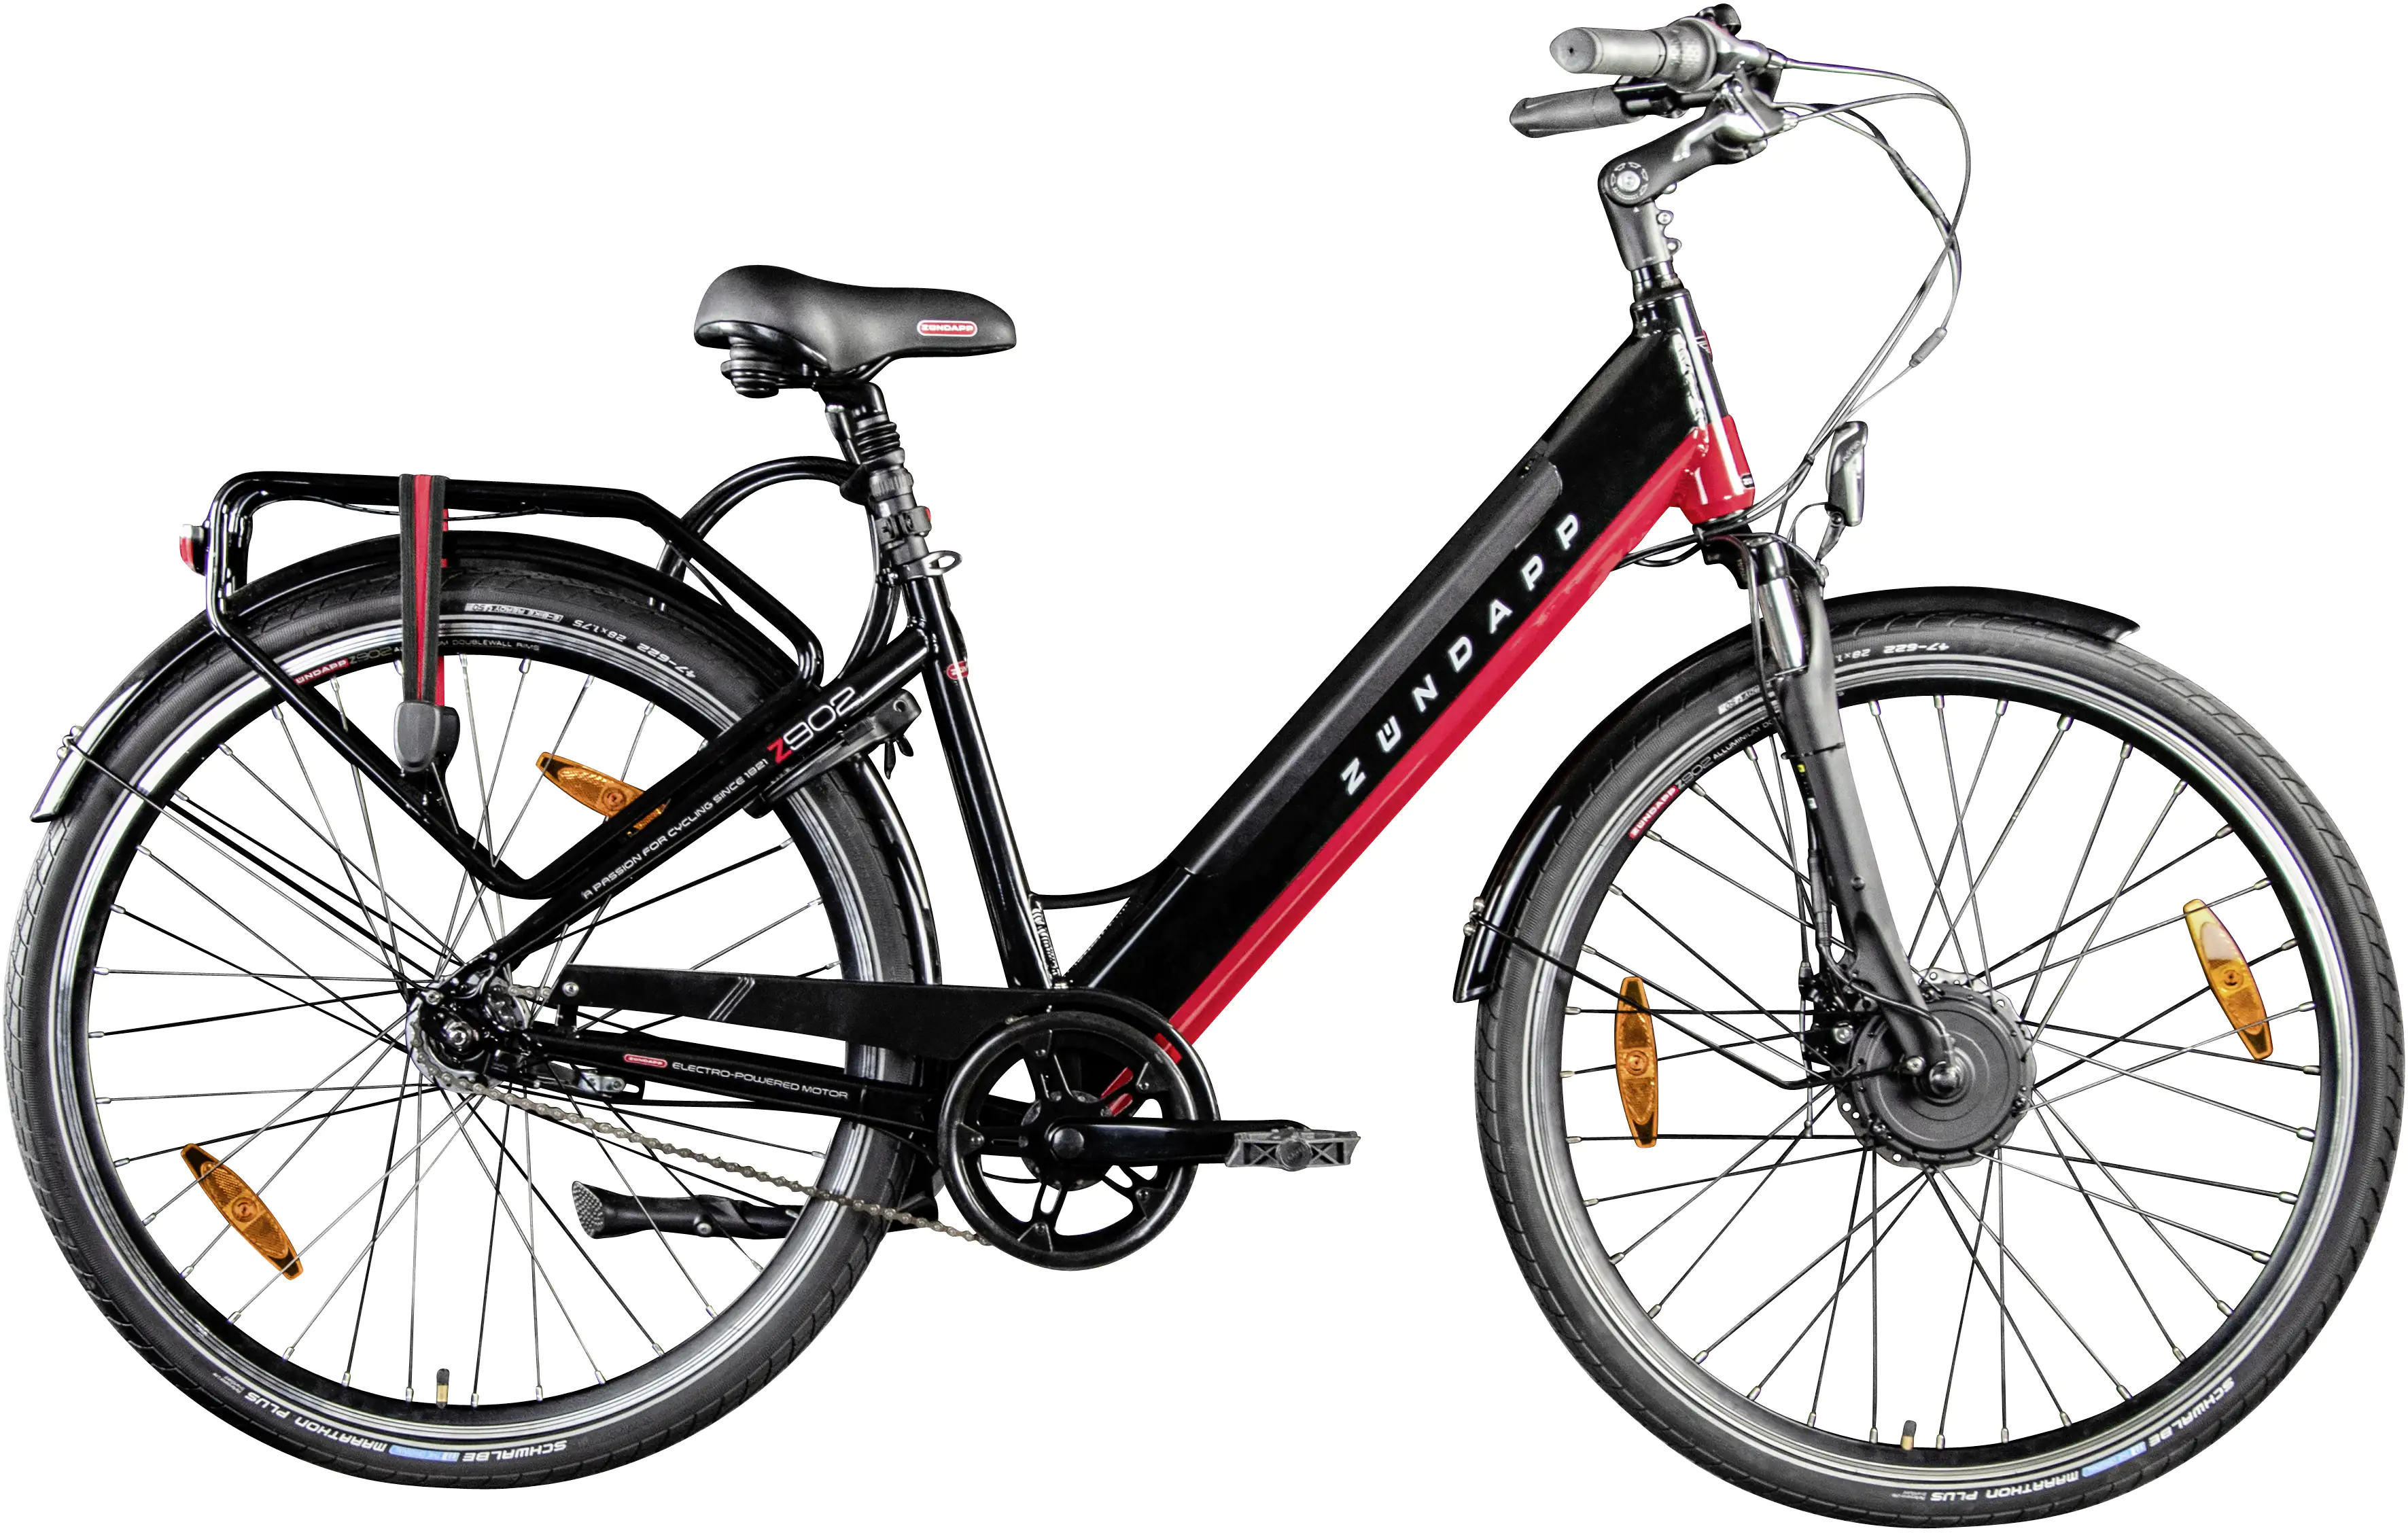 Zündapp E-Bike City Z902 700C VM 28 Zoll RH 48 cm 7-Gang 417 Wh schwarz rot  kaufen | Globus Baumarkt